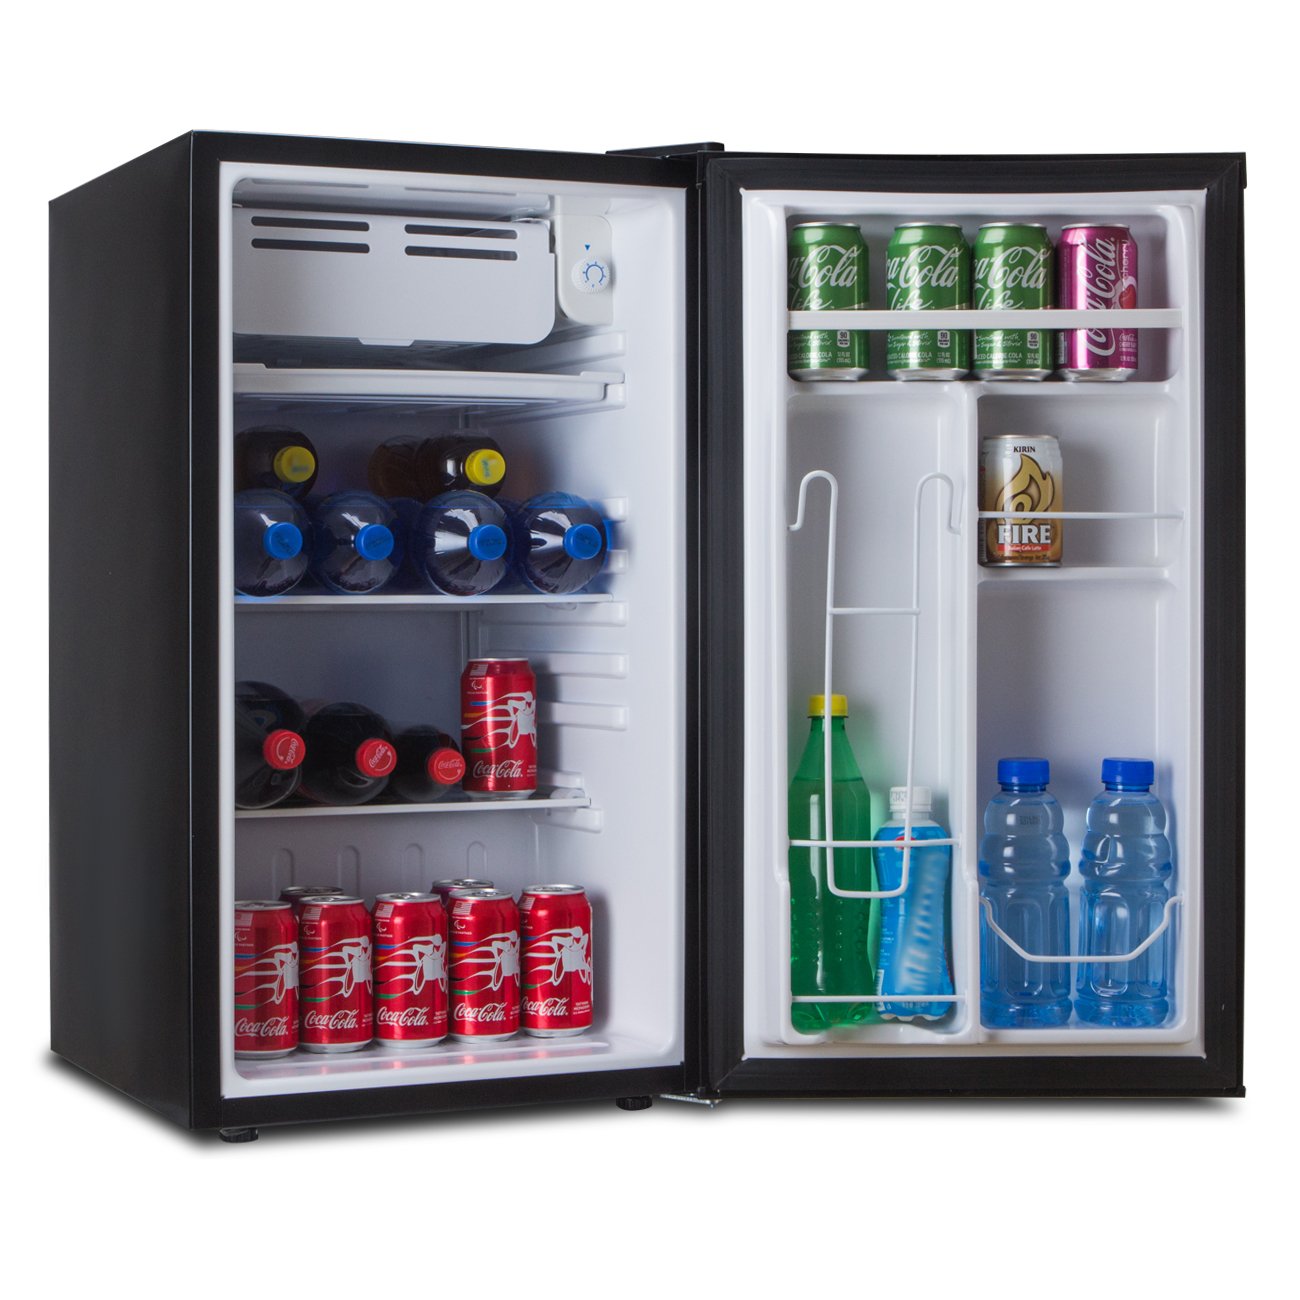 В каких магазинах можно купить холодильники. Холодильник Euna Retro Mini Fridge. Мини холодильник Ch-9174. Мини холодильник самсунг 50х50х50. Минихолодильник 5 c21hl.